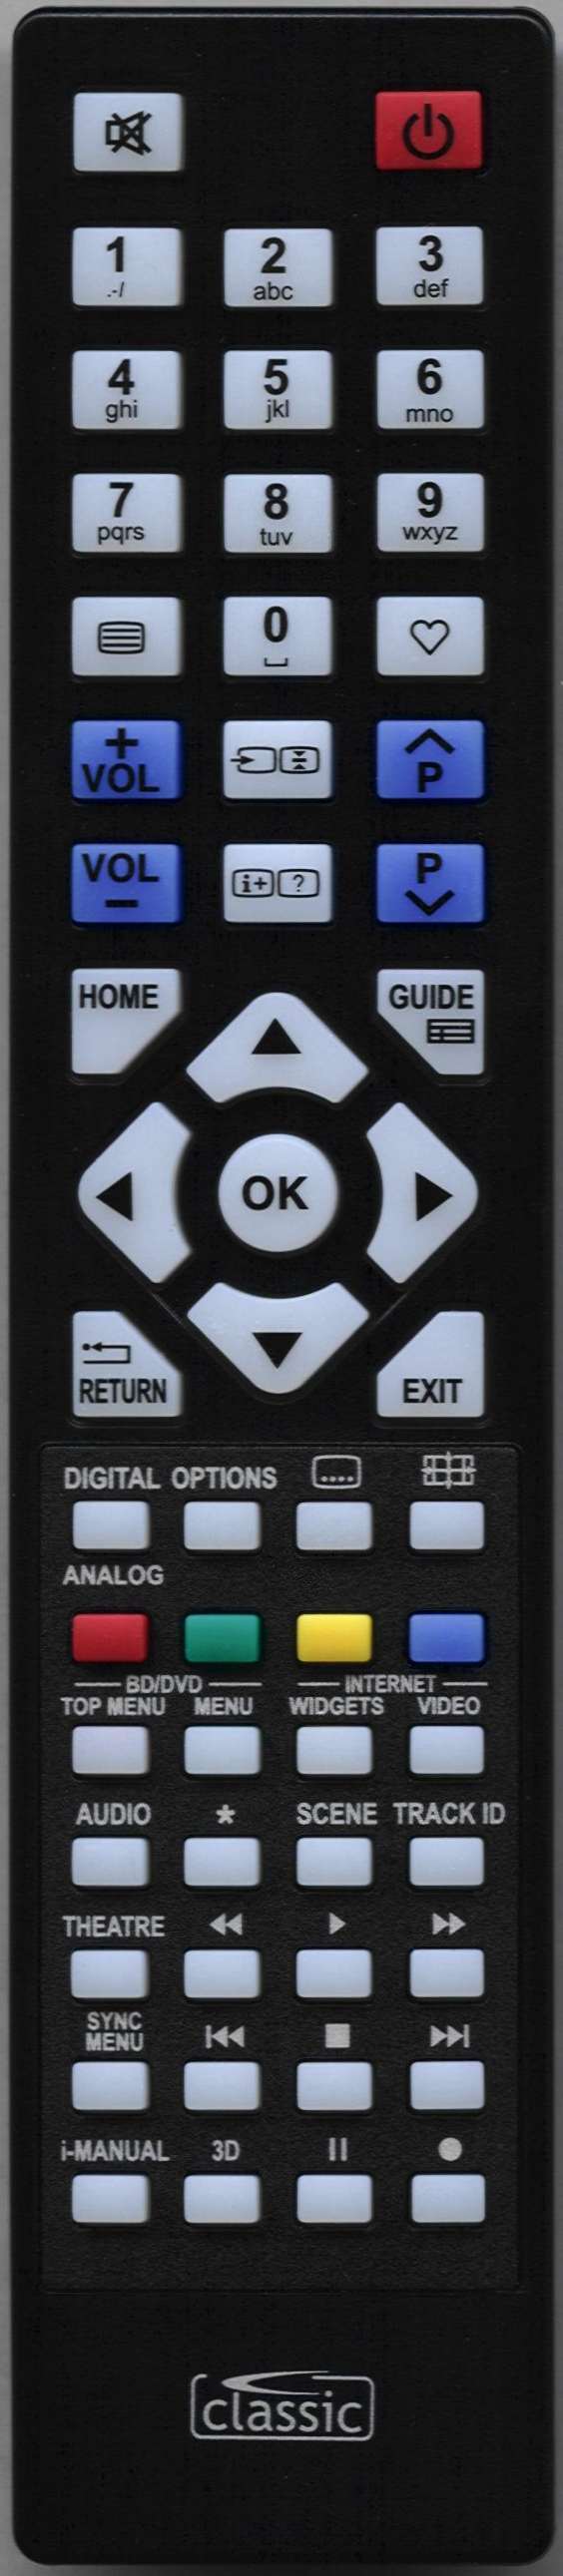 SONY KDL-32EX523 Remote Control Alternative